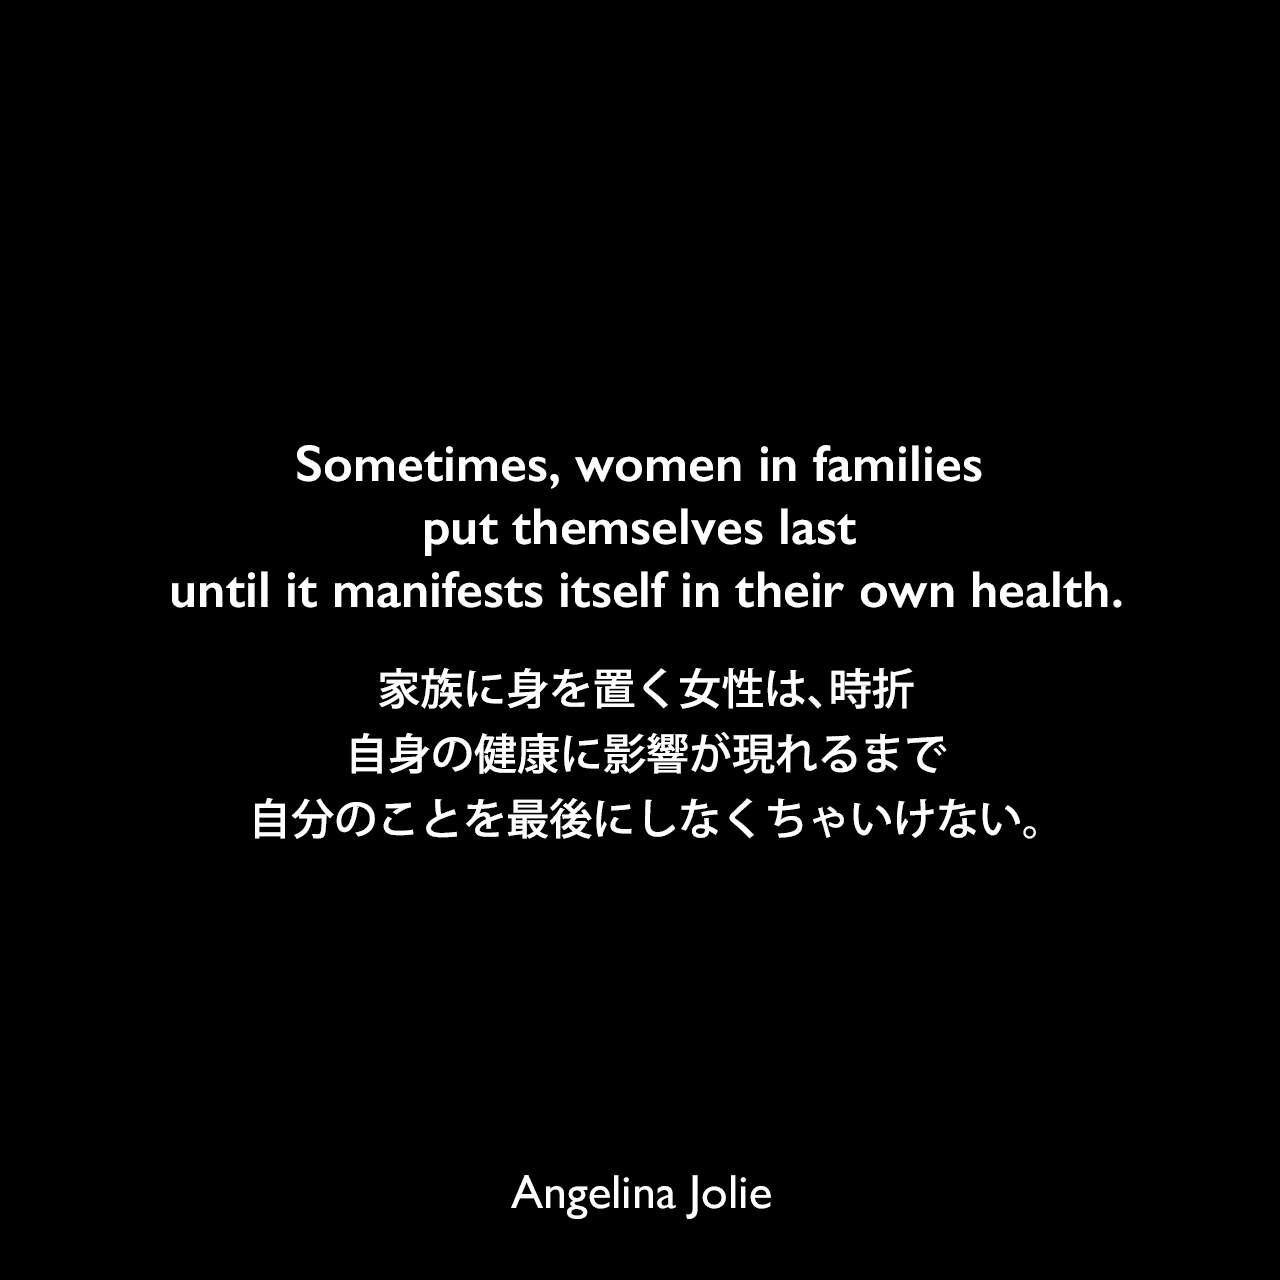 Sometimes, women in families put themselves last until it manifests itself in their own health.家族に身を置く女性は、時折、自身の健康に影響が現れるまで自分のことを最後にしなくちゃいけない。Angelina Jolie